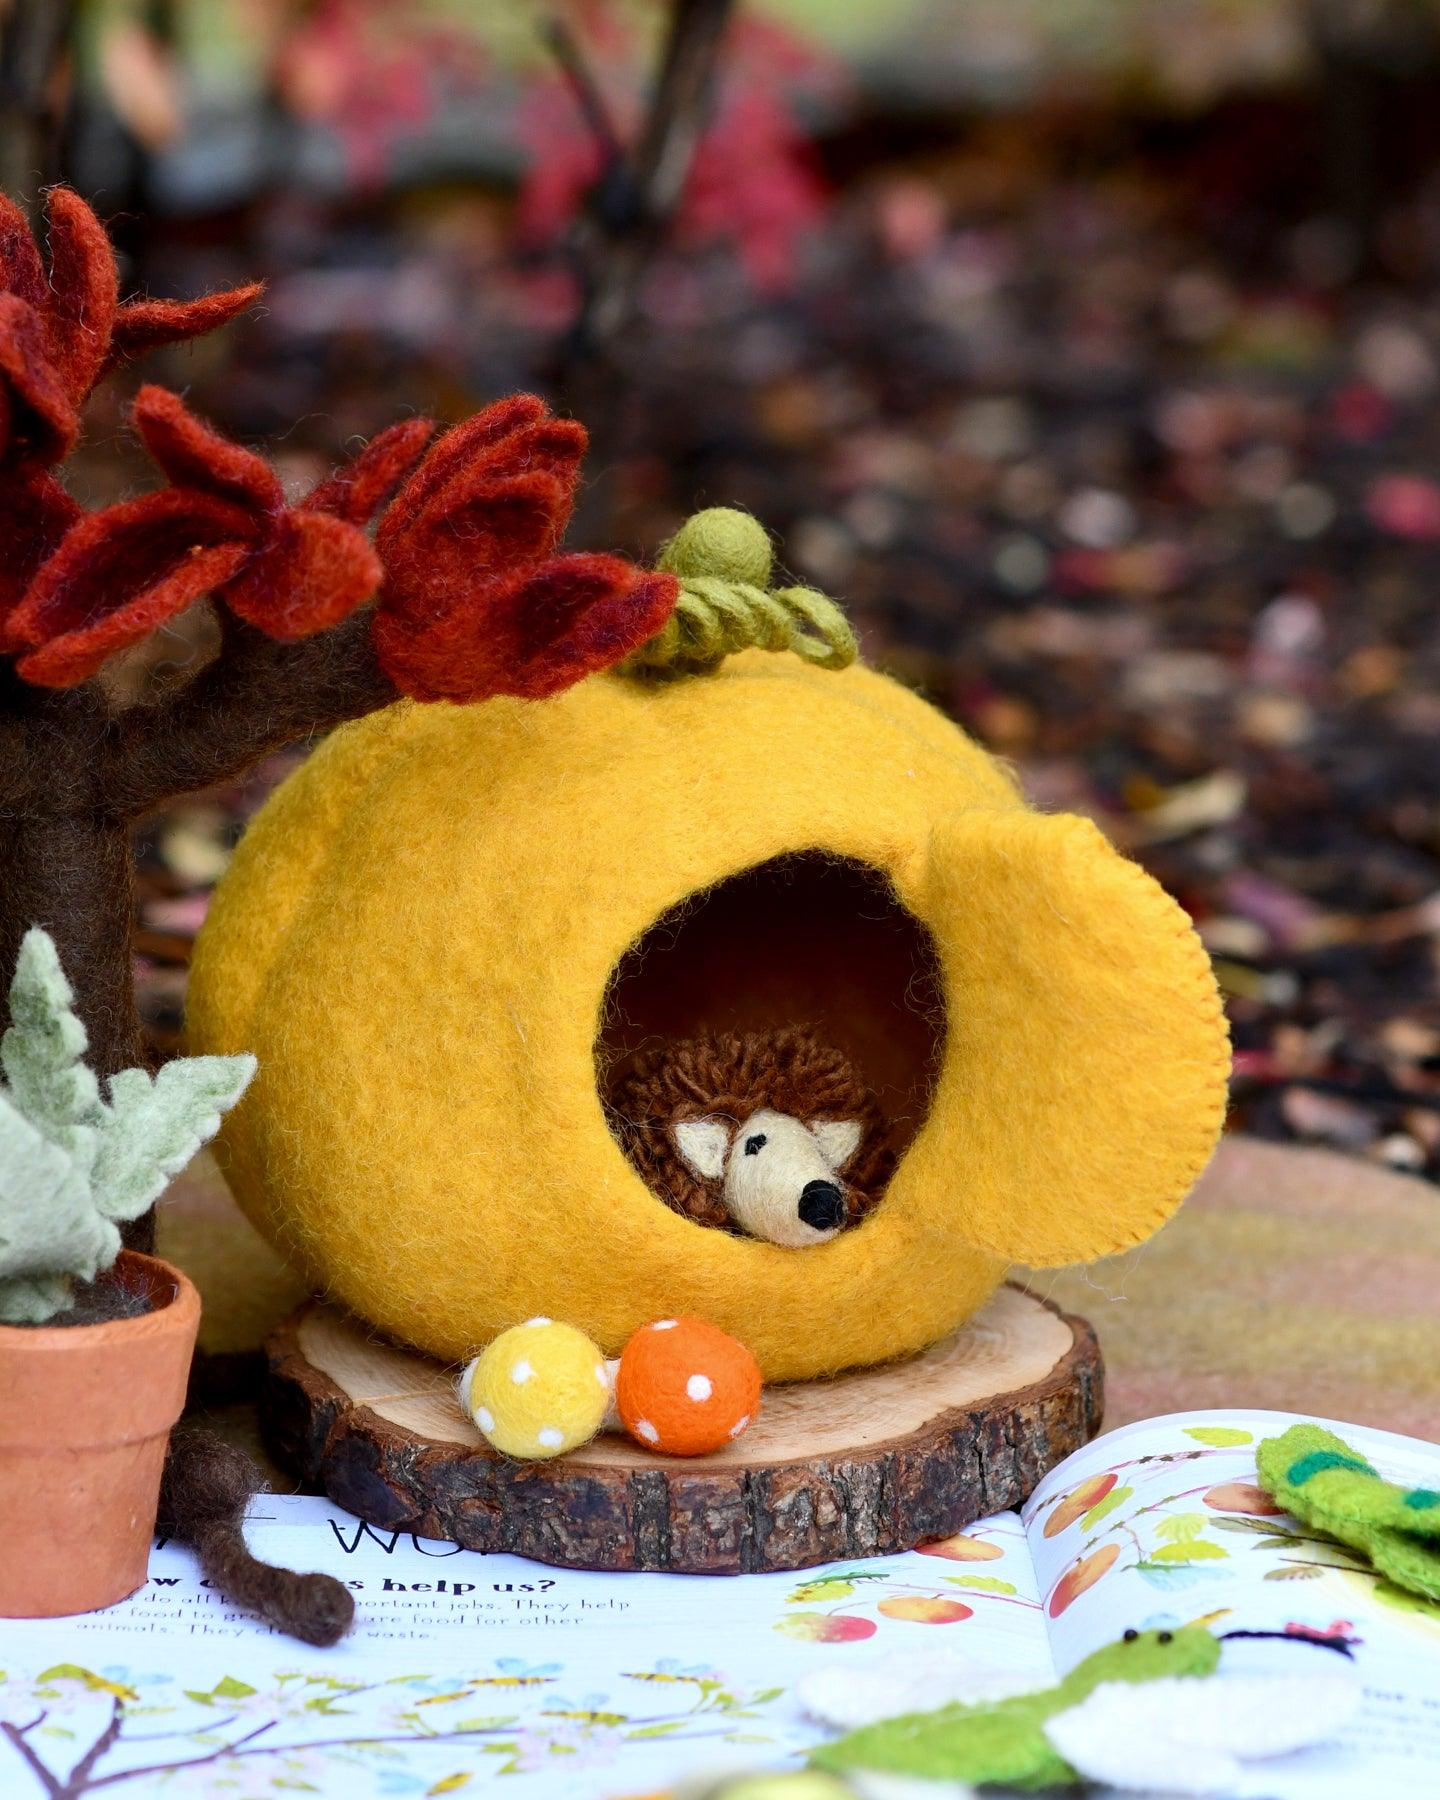 Felt Pumpkin House with Hedgehog Toy - Tara Treasures